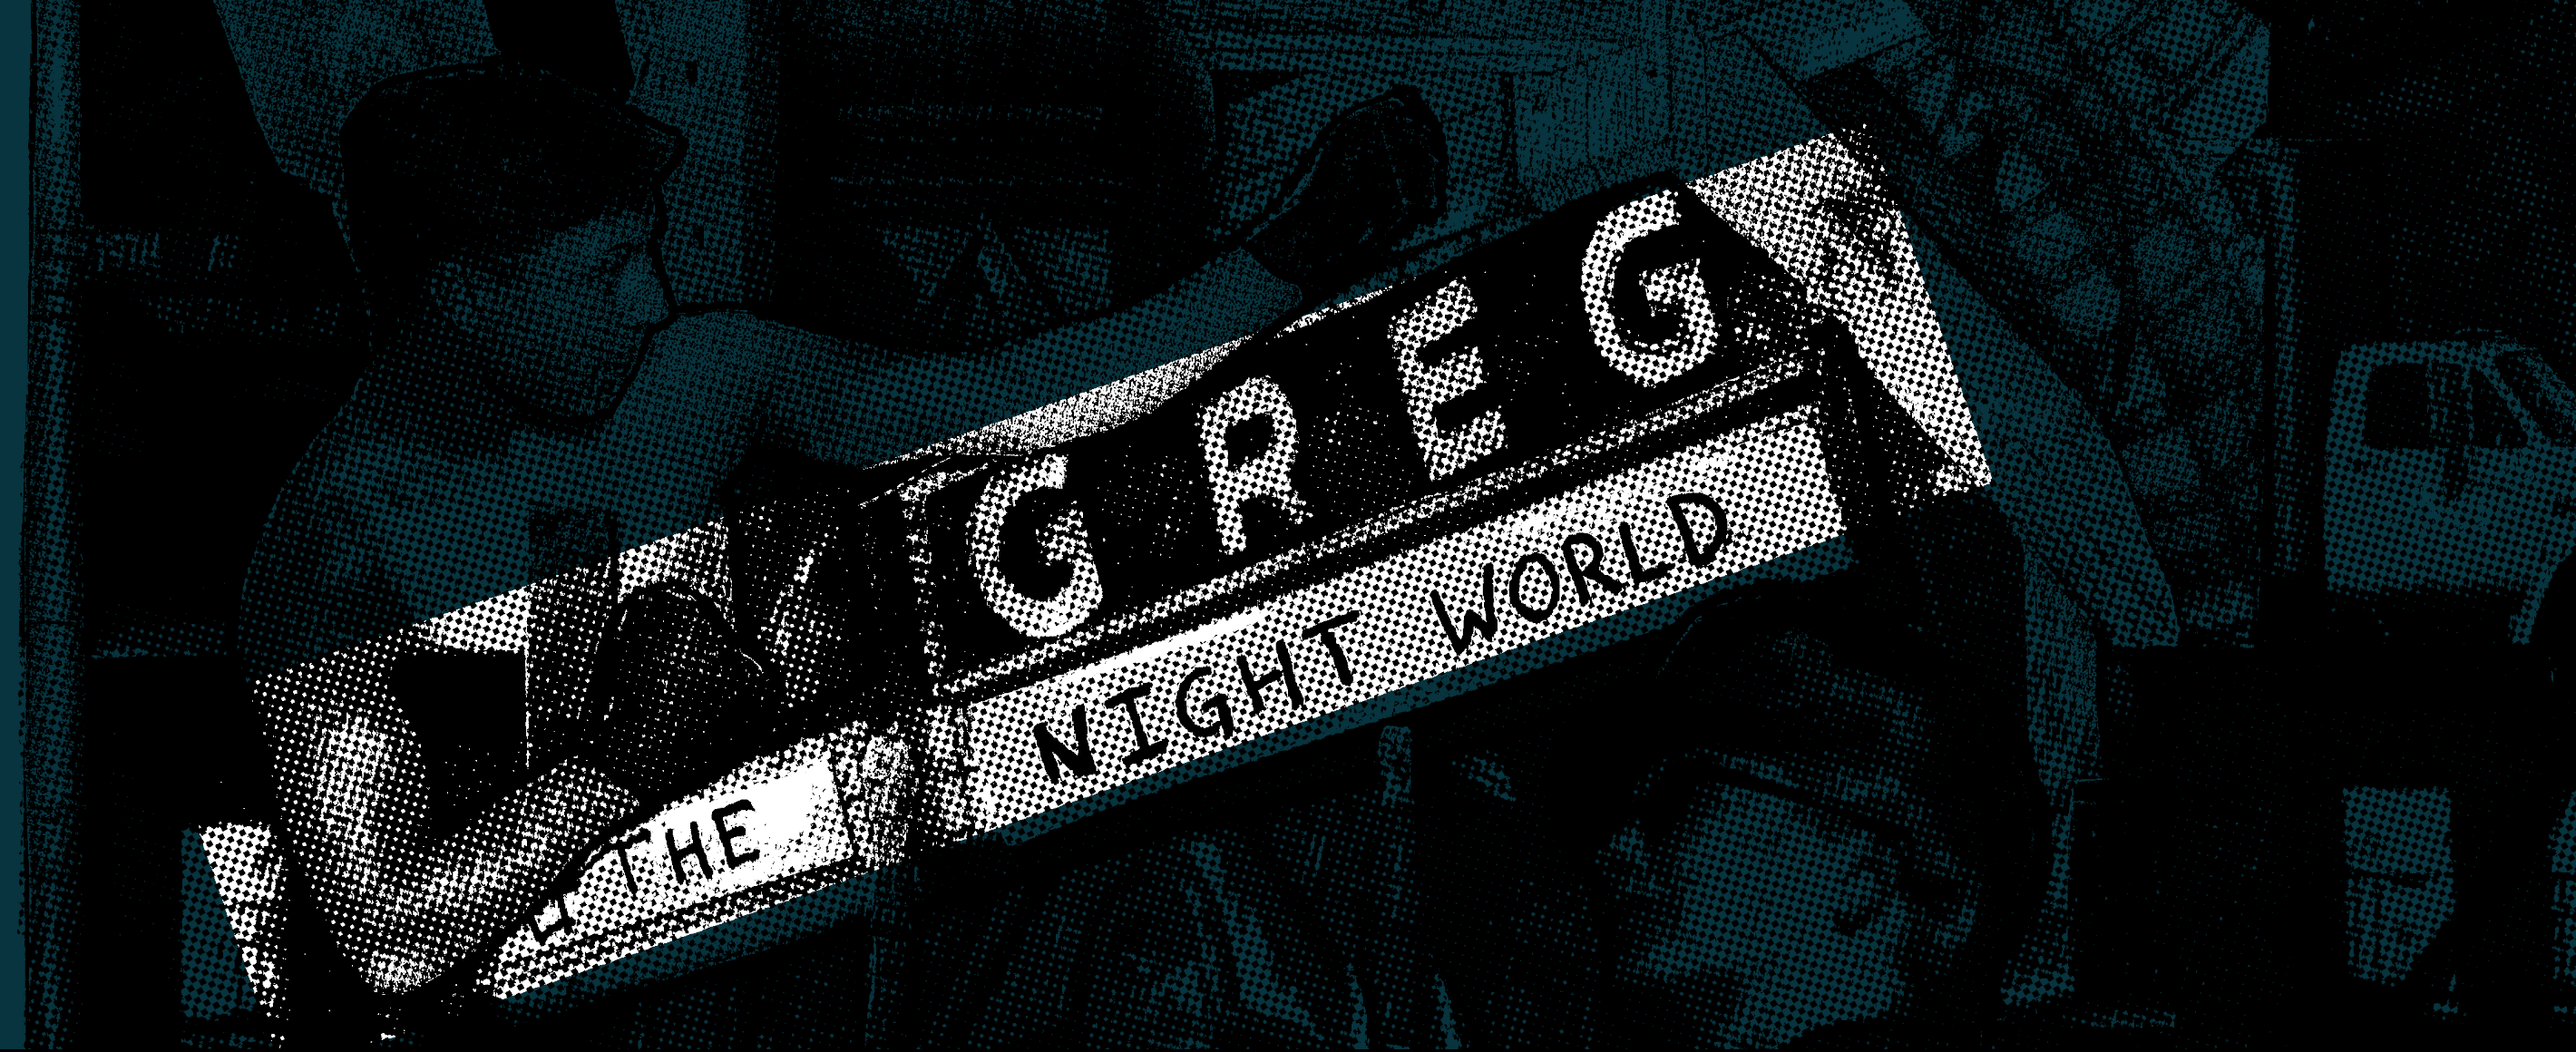 Greg and the Night World